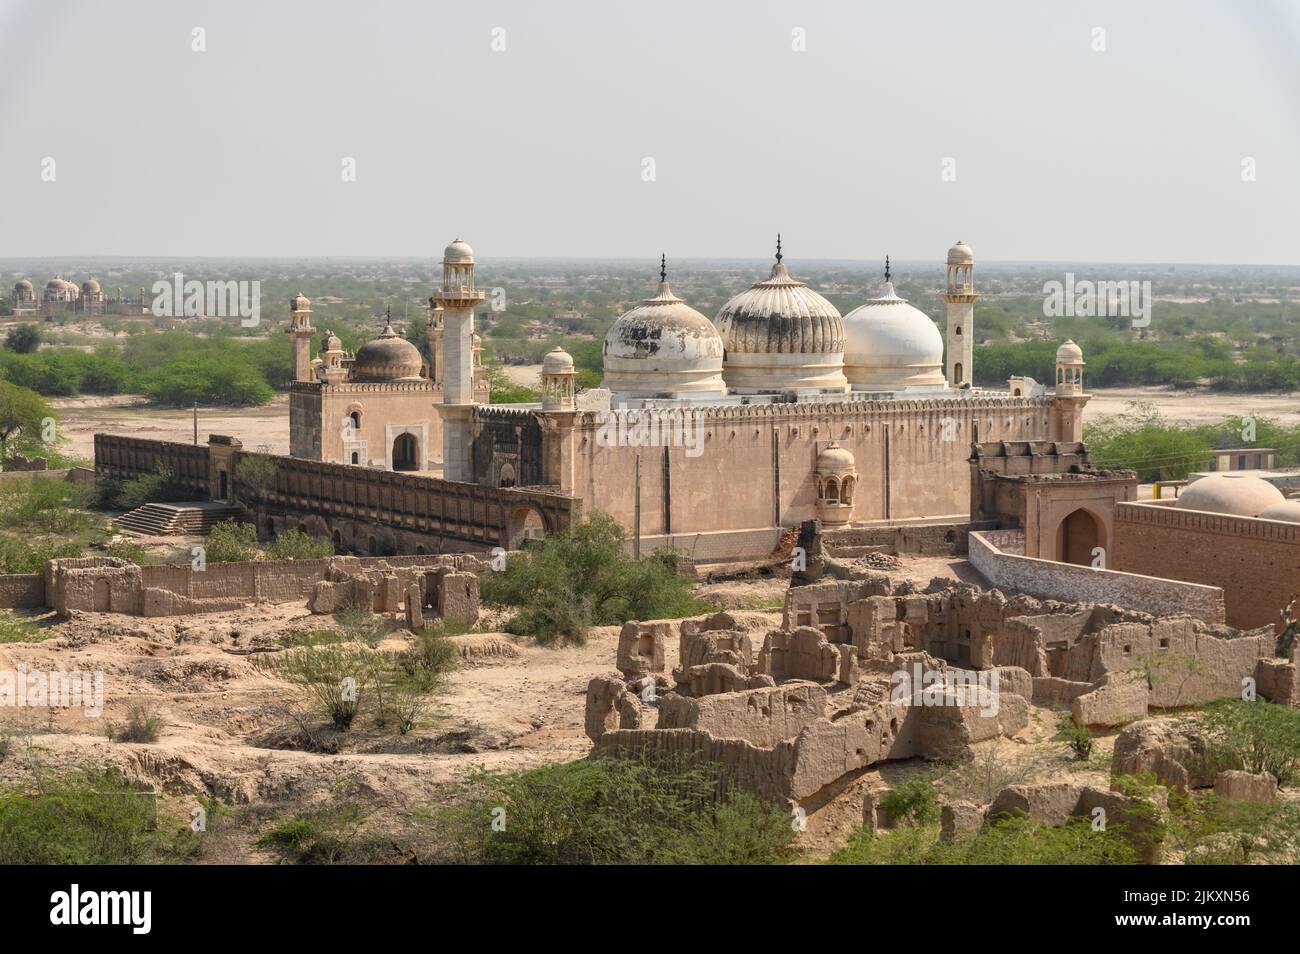 La Moschea di Abbasi è una moschea situata nella città di Bahawalpur, Forte di Derawar, regione del Cholistan del Punjab la provincia del Pakistan. Foto Stock